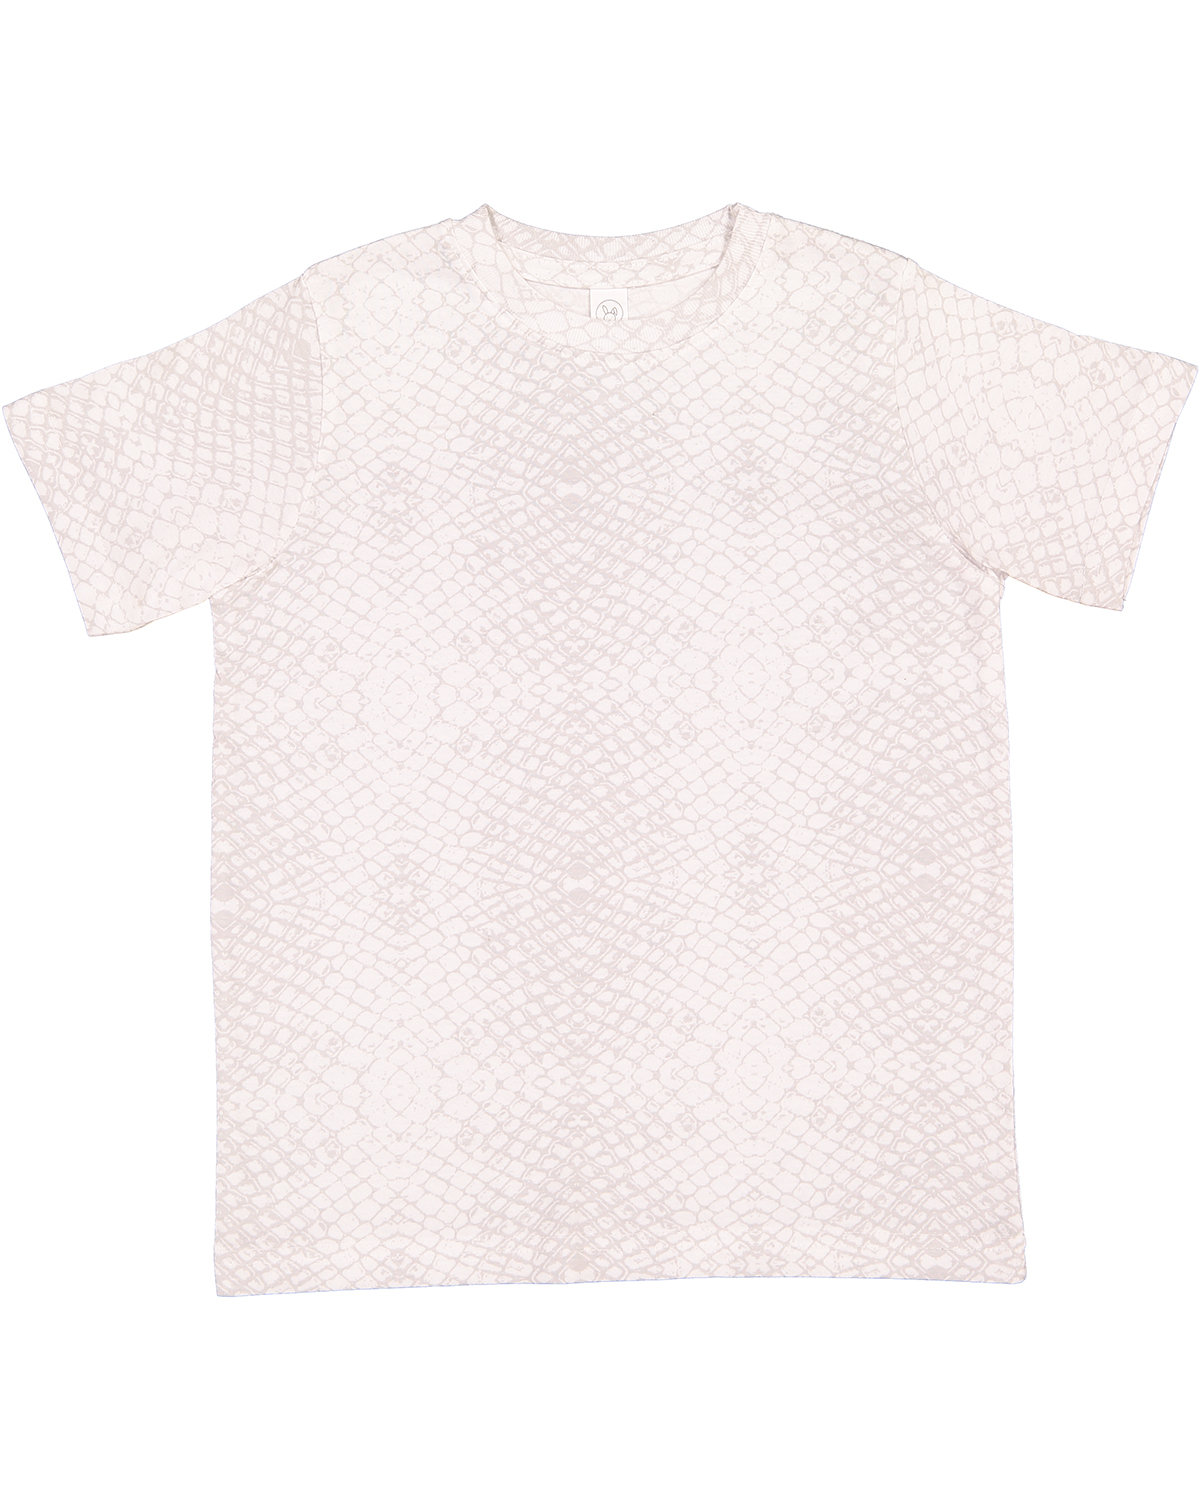 Rabbit Skins Toddler Fine Jersey T-Shirt WHITE REPTILE 